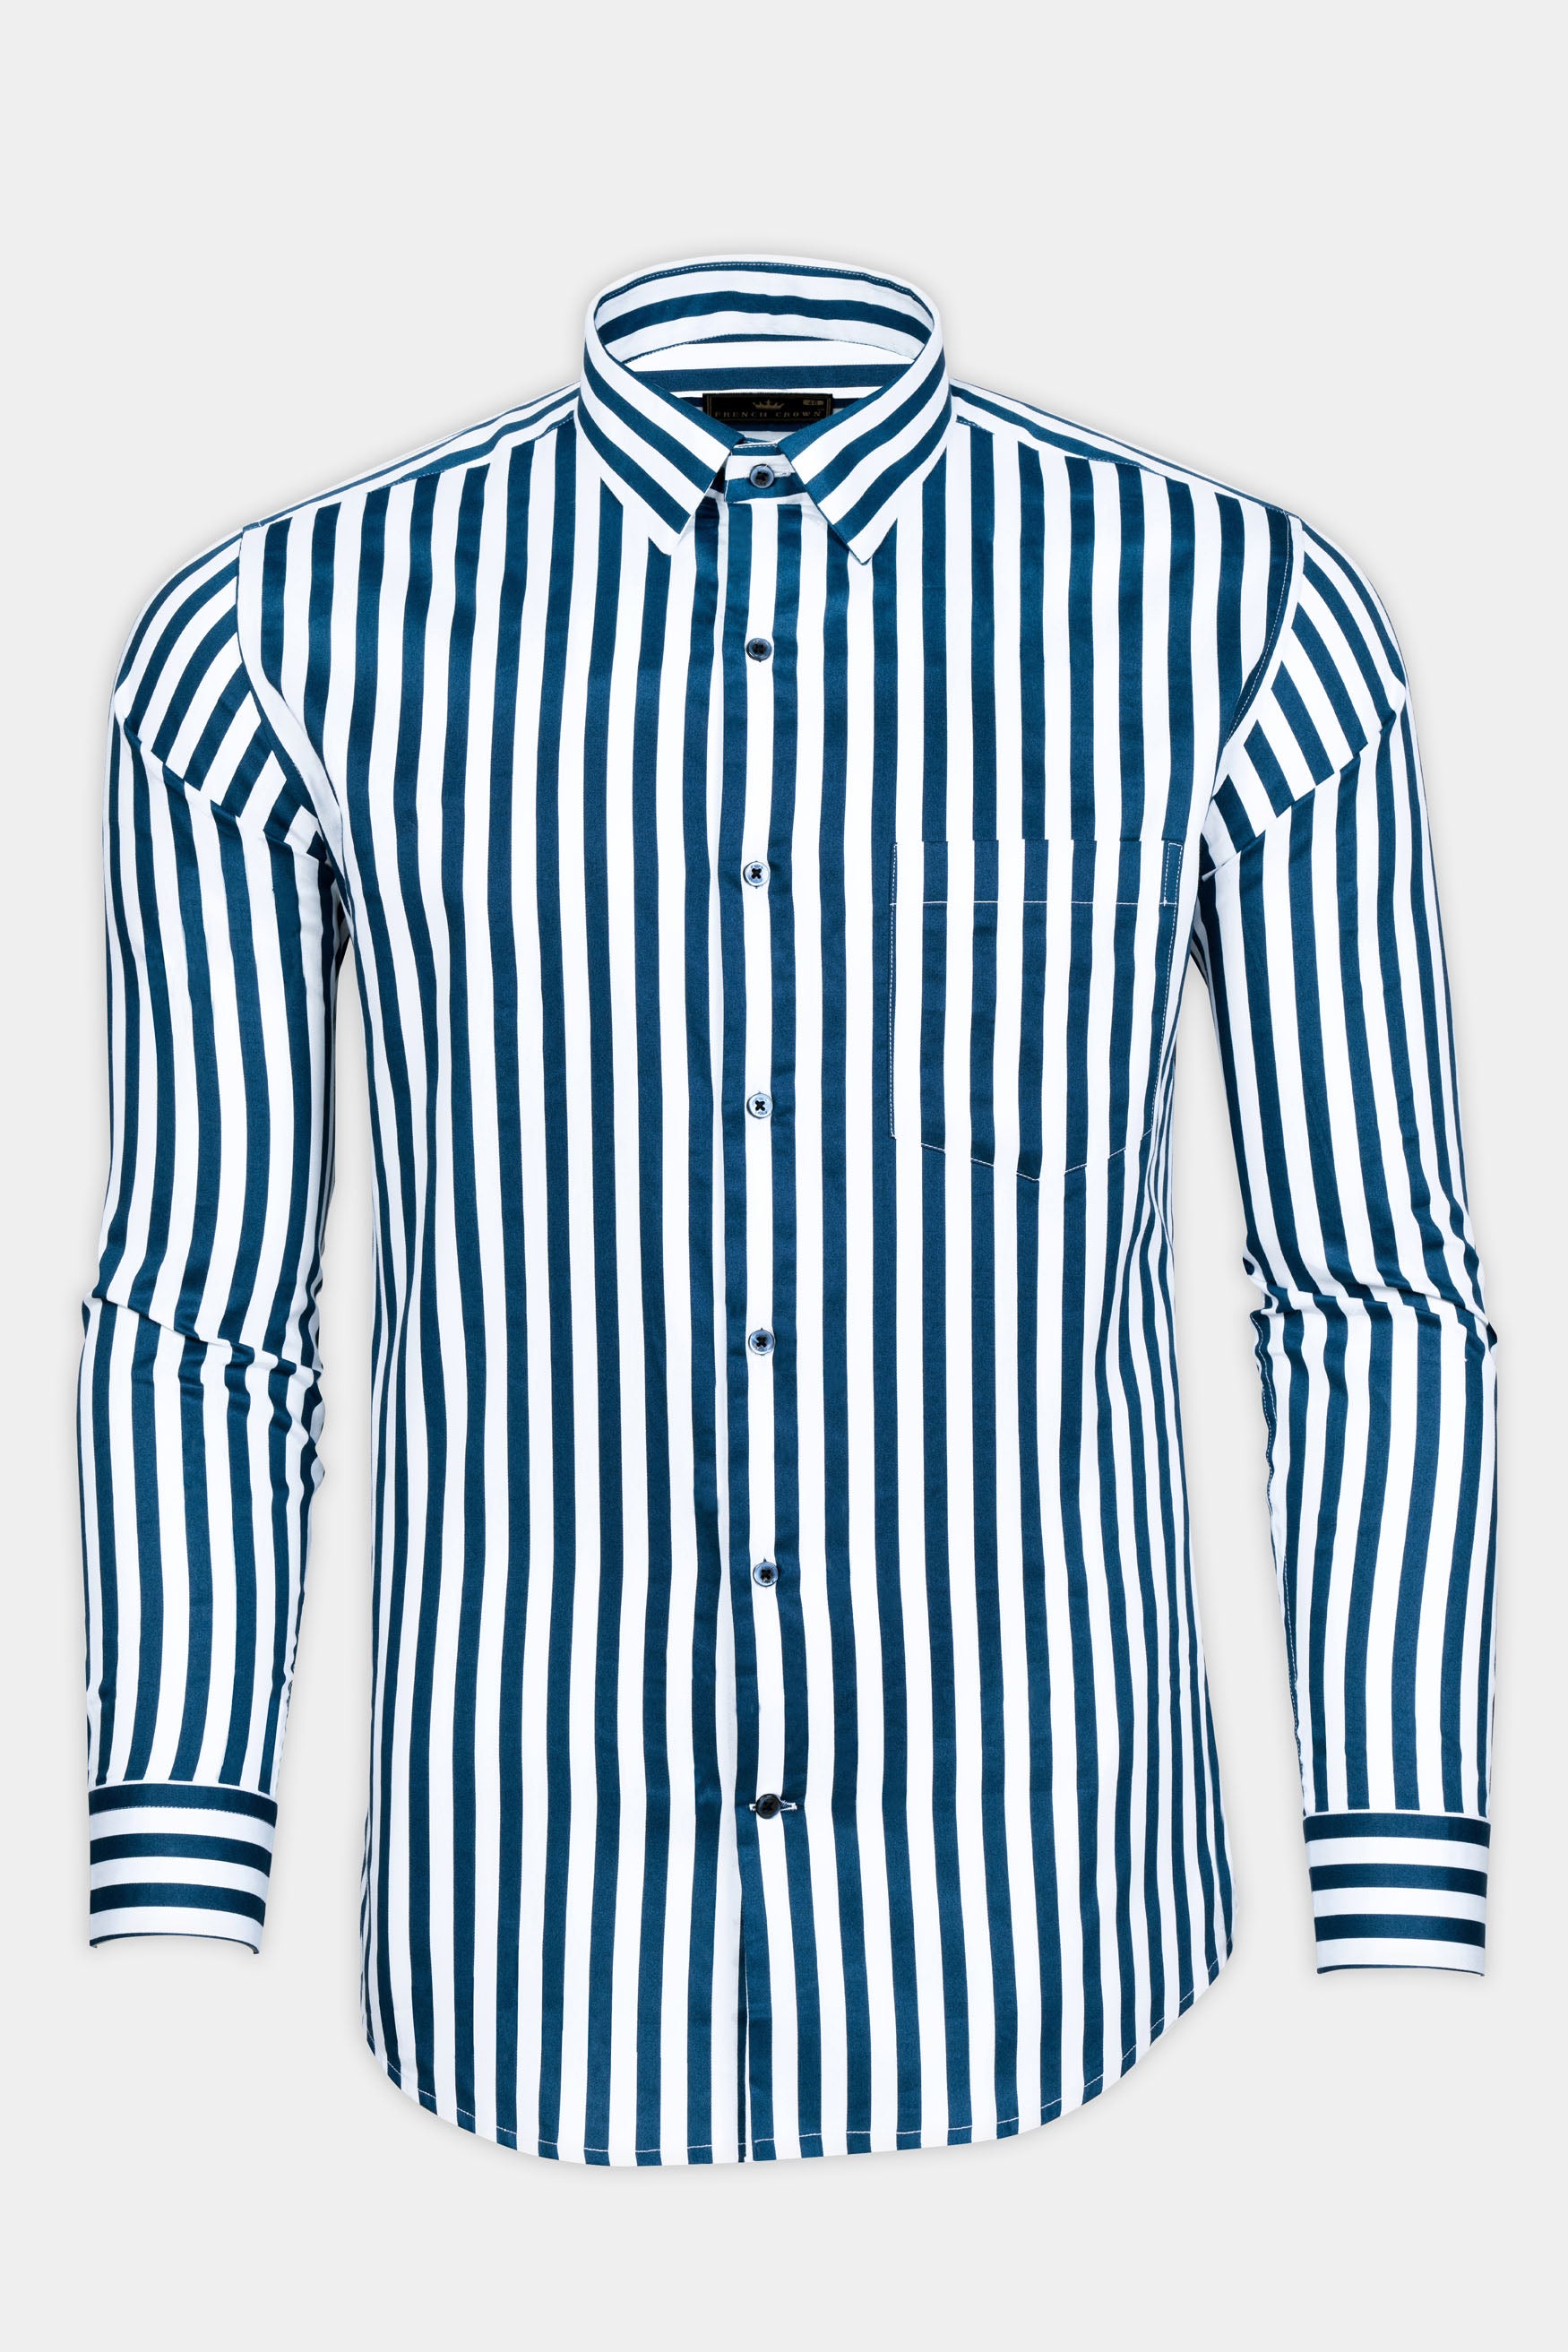 Regal Blue and Bright White Striped Subtle Sheen Super Soft Premium Cotton Designer Shirt 12195-BLE-38, 12195-BLE-H-38, 12195-BLE-39, 12195-BLE-H-39, 12195-BLE-40, 12195-BLE-H-40, 12195-BLE-42, 12195-BLE-H-42, 12195-BLE-44, 12195-BLE-H-44, 12195-BLE-46, 12195-BLE-H-46, 12195-BLE-48, 12195-BLE-H-48, 12195-BLE-50, 12195-BLE-H-50, 12195-BLE-52, 12195-BLE-H-52